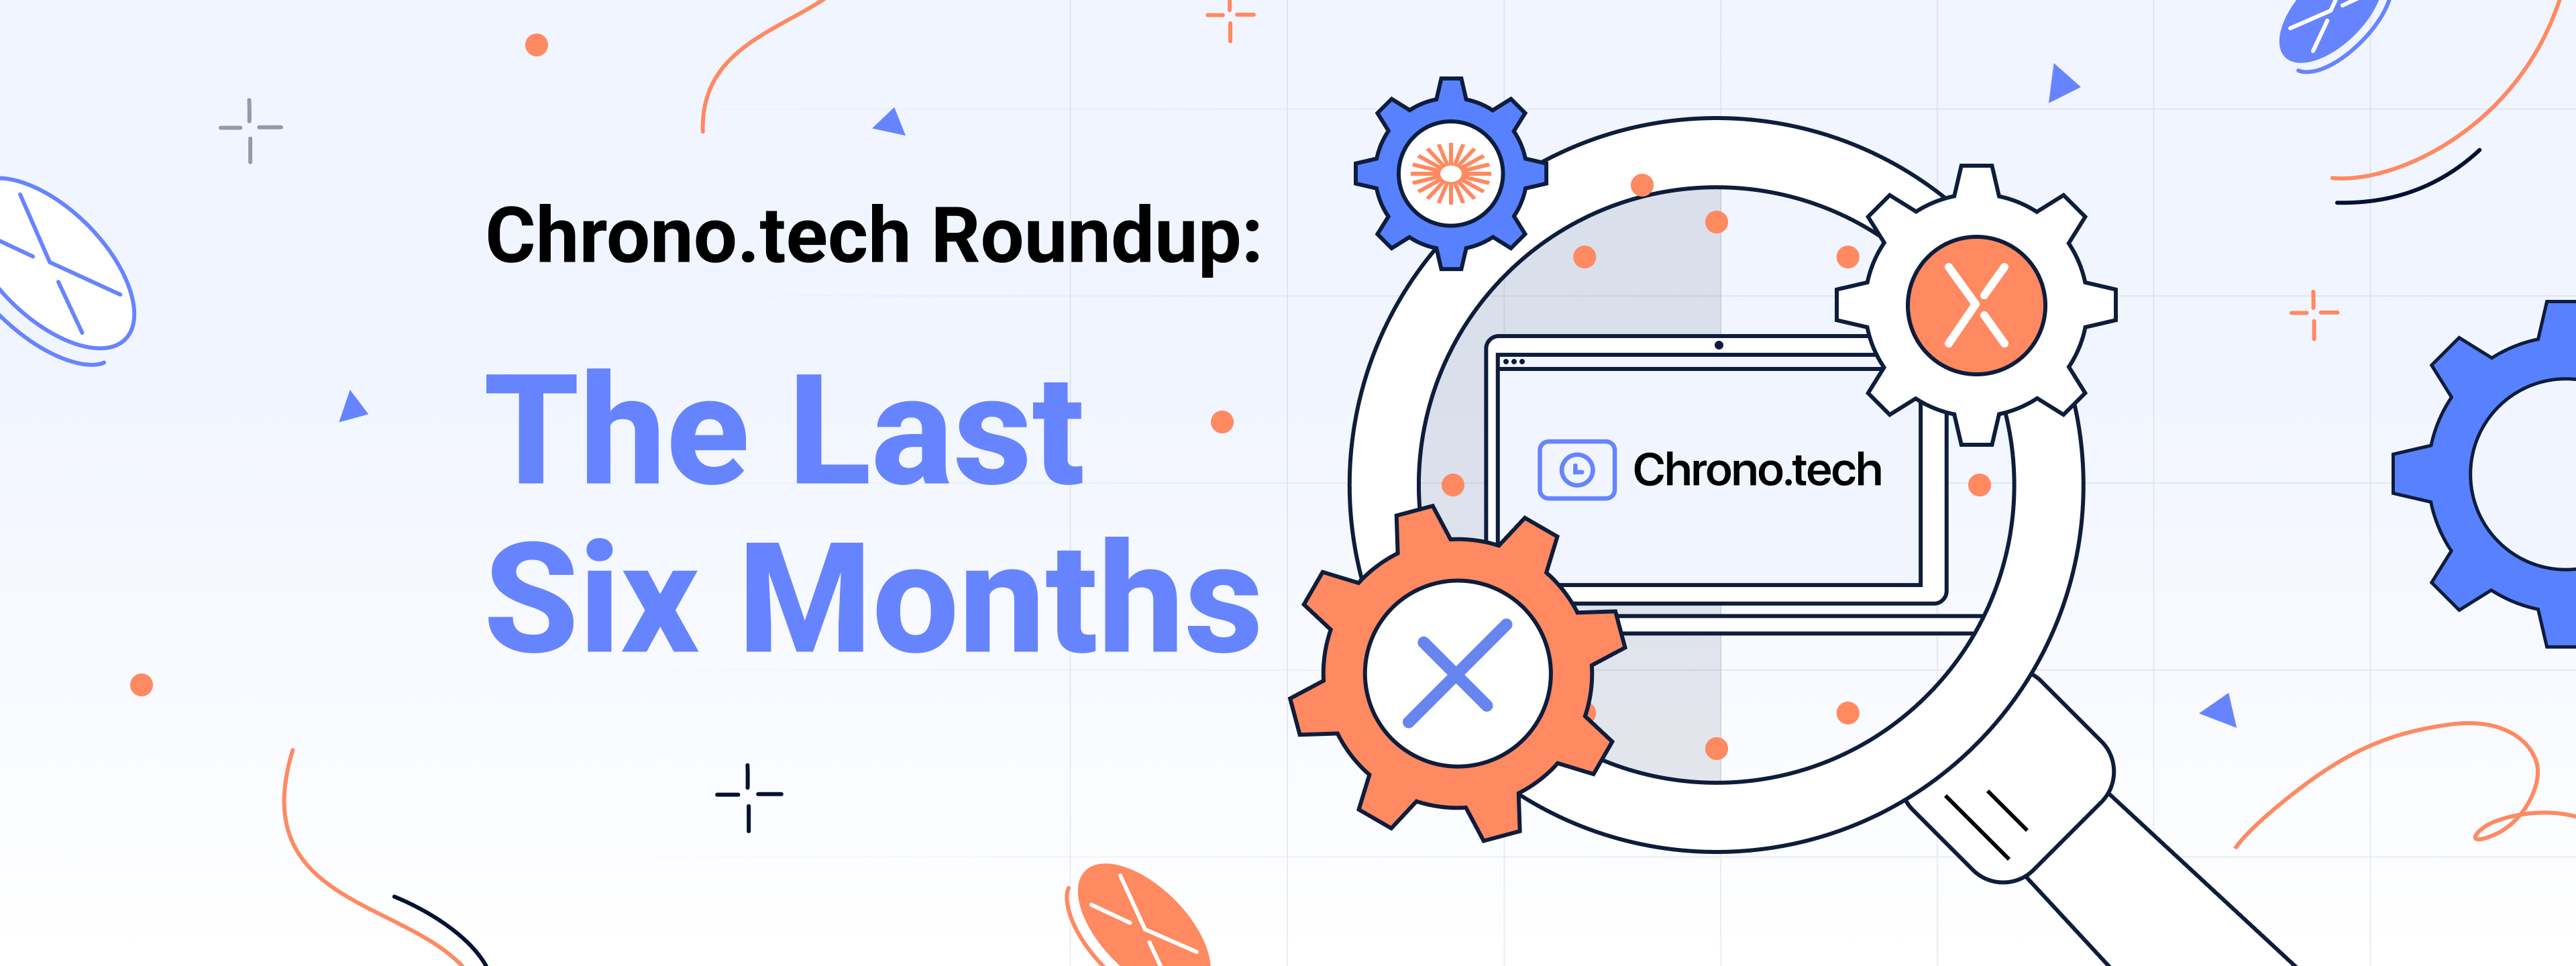 Chrono.tech Roundup: The Last Six Months